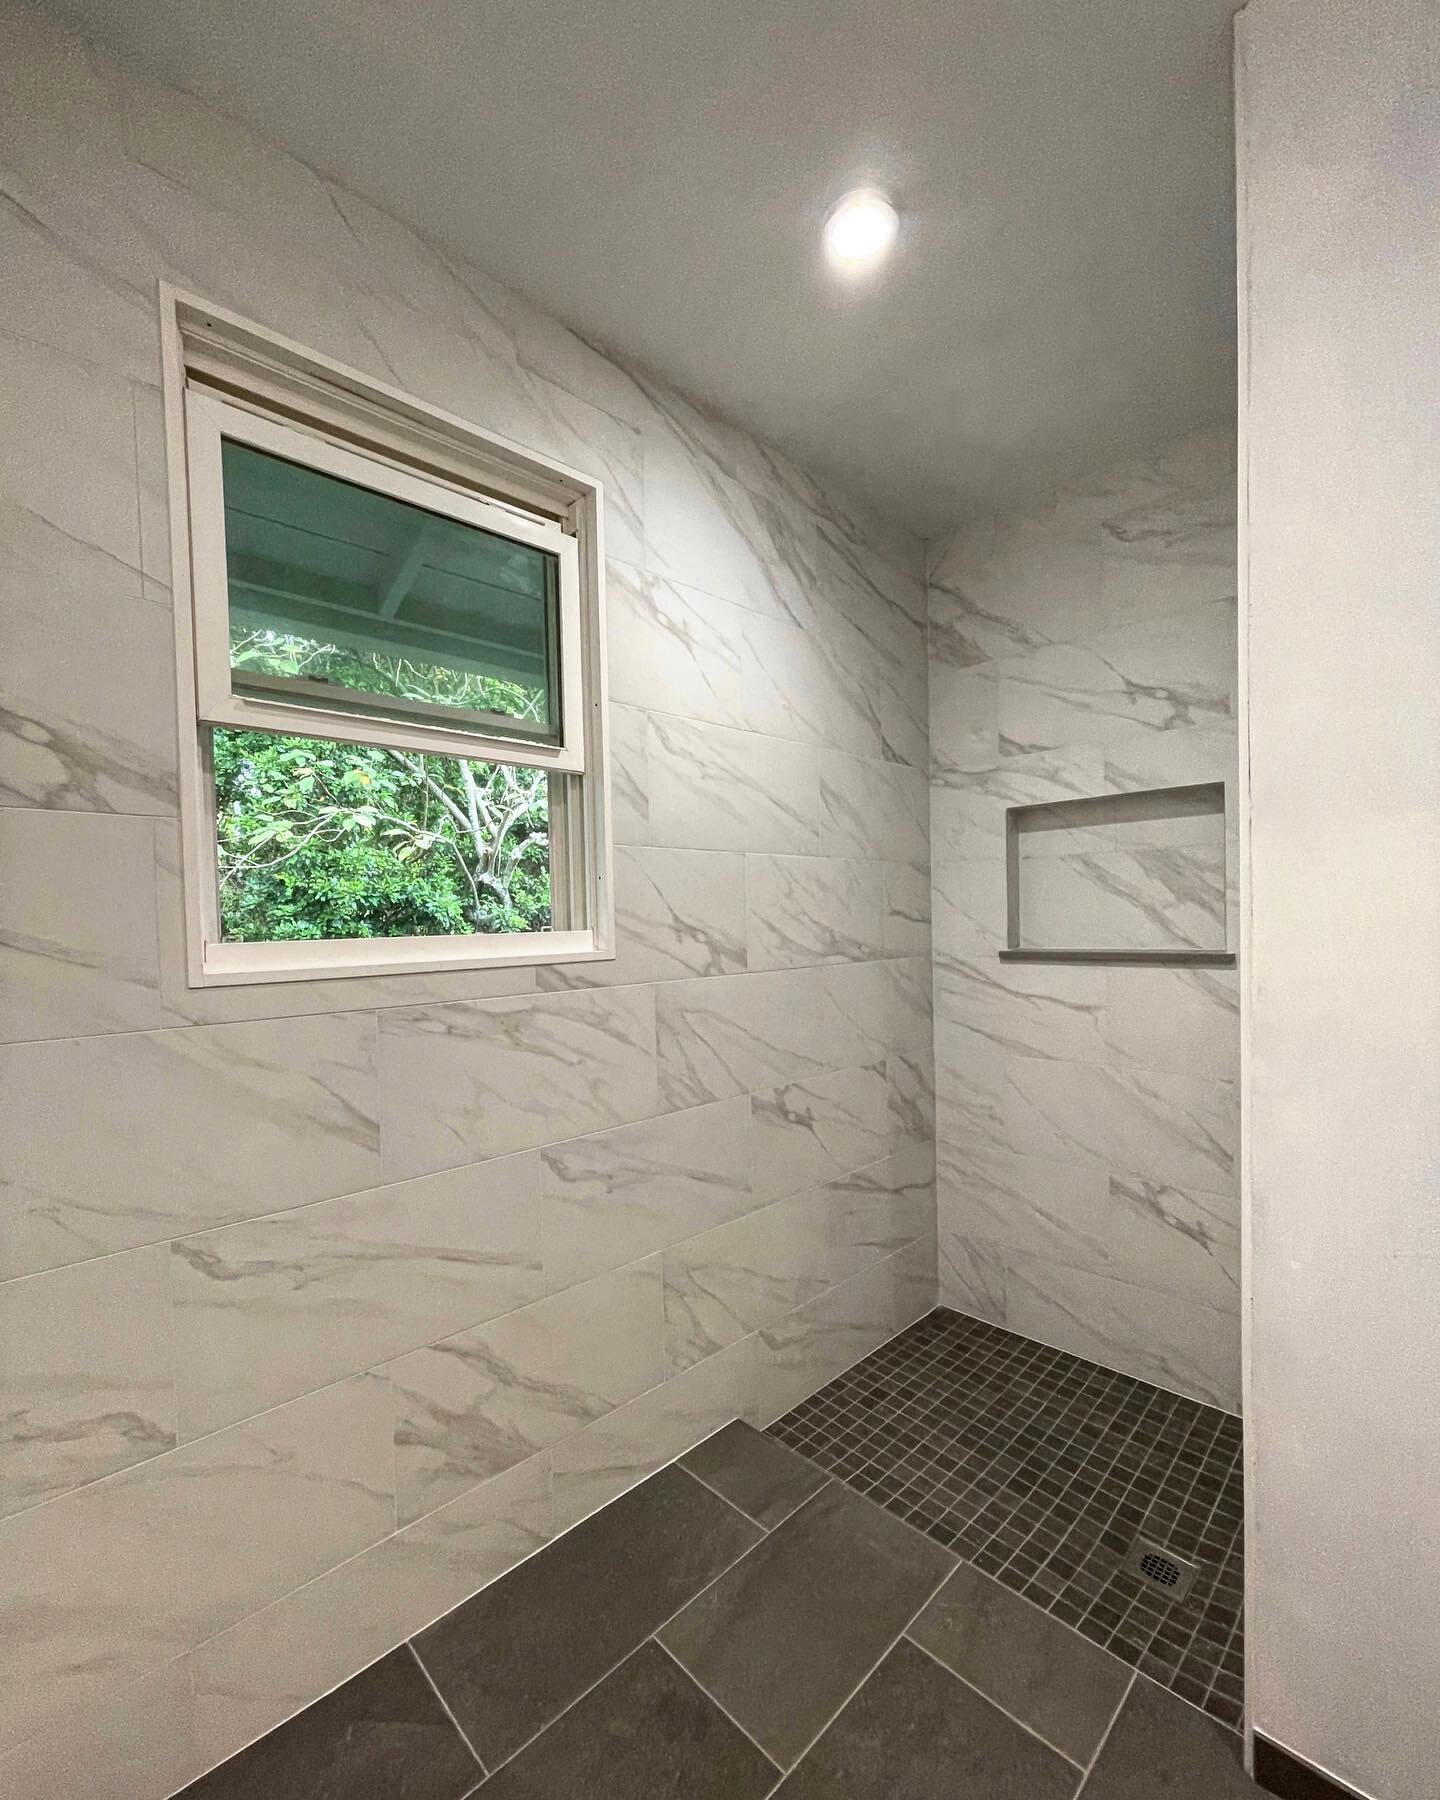 Recessed shower pan for this bathroom remodel 👌🏻 #shower #design #construction #tilesdesign #tiles #bathroomdesign #bathroomremodel #showerdesign #hawaii